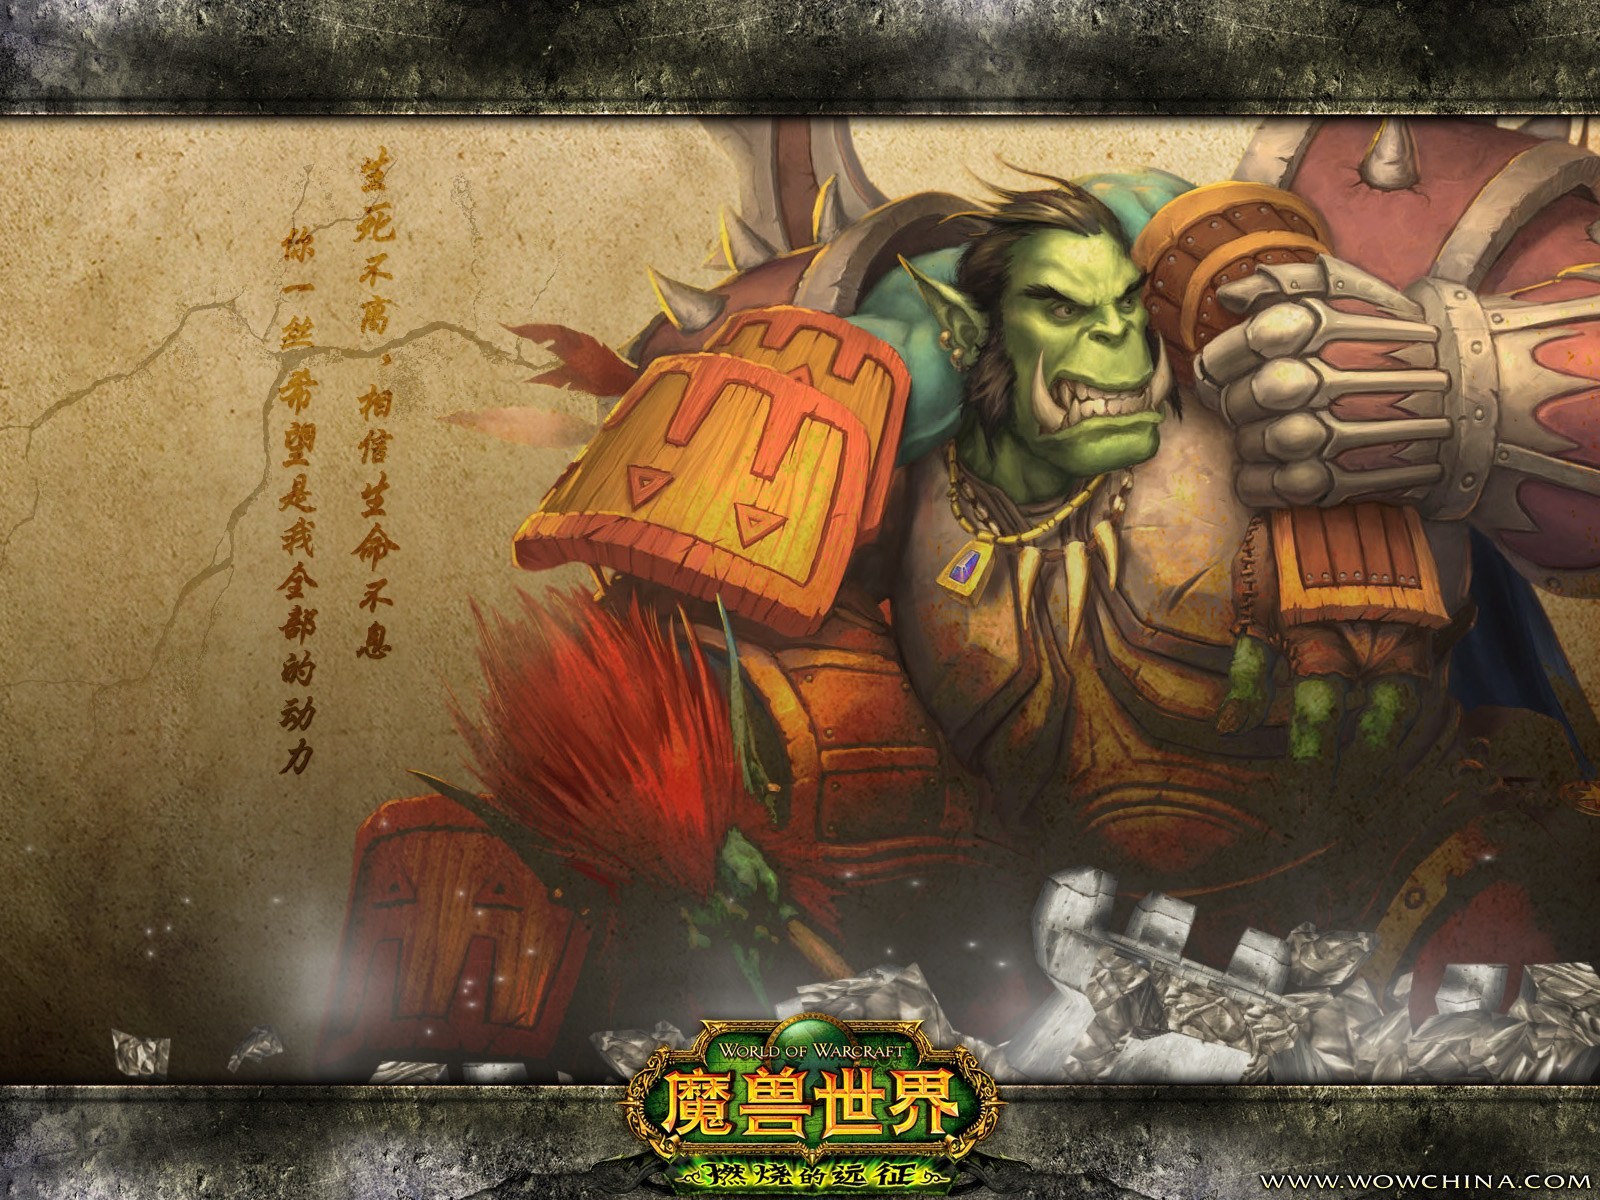 World of Warcraft: fondo de pantalla oficial de The Burning Crusade (2) #20 - 1600x1200